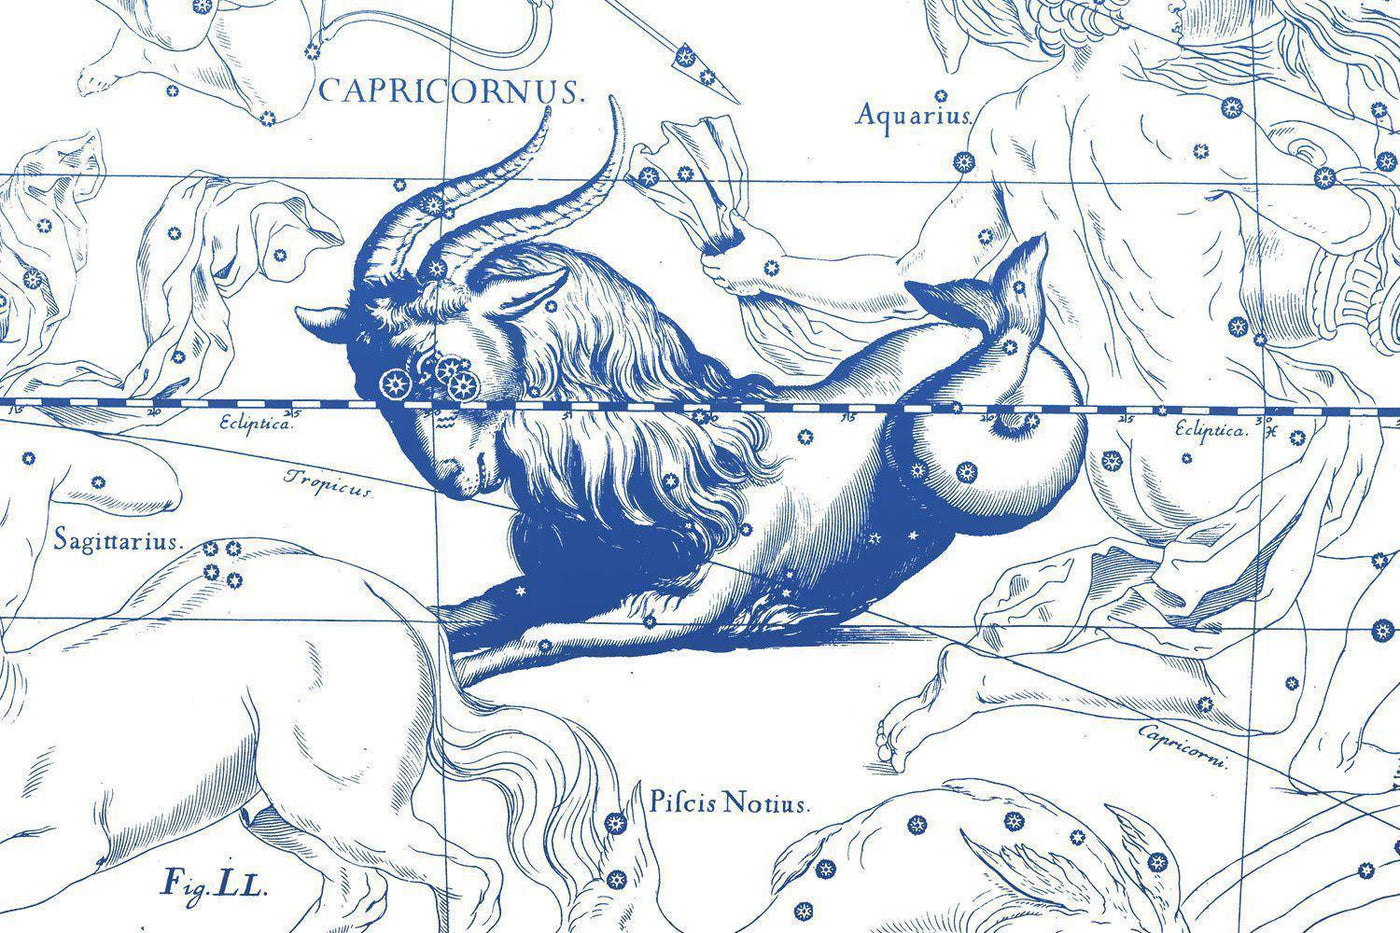 Night Sky Capricorn Astrology Wallpaper Mural-Wall Mural-Eazywallz